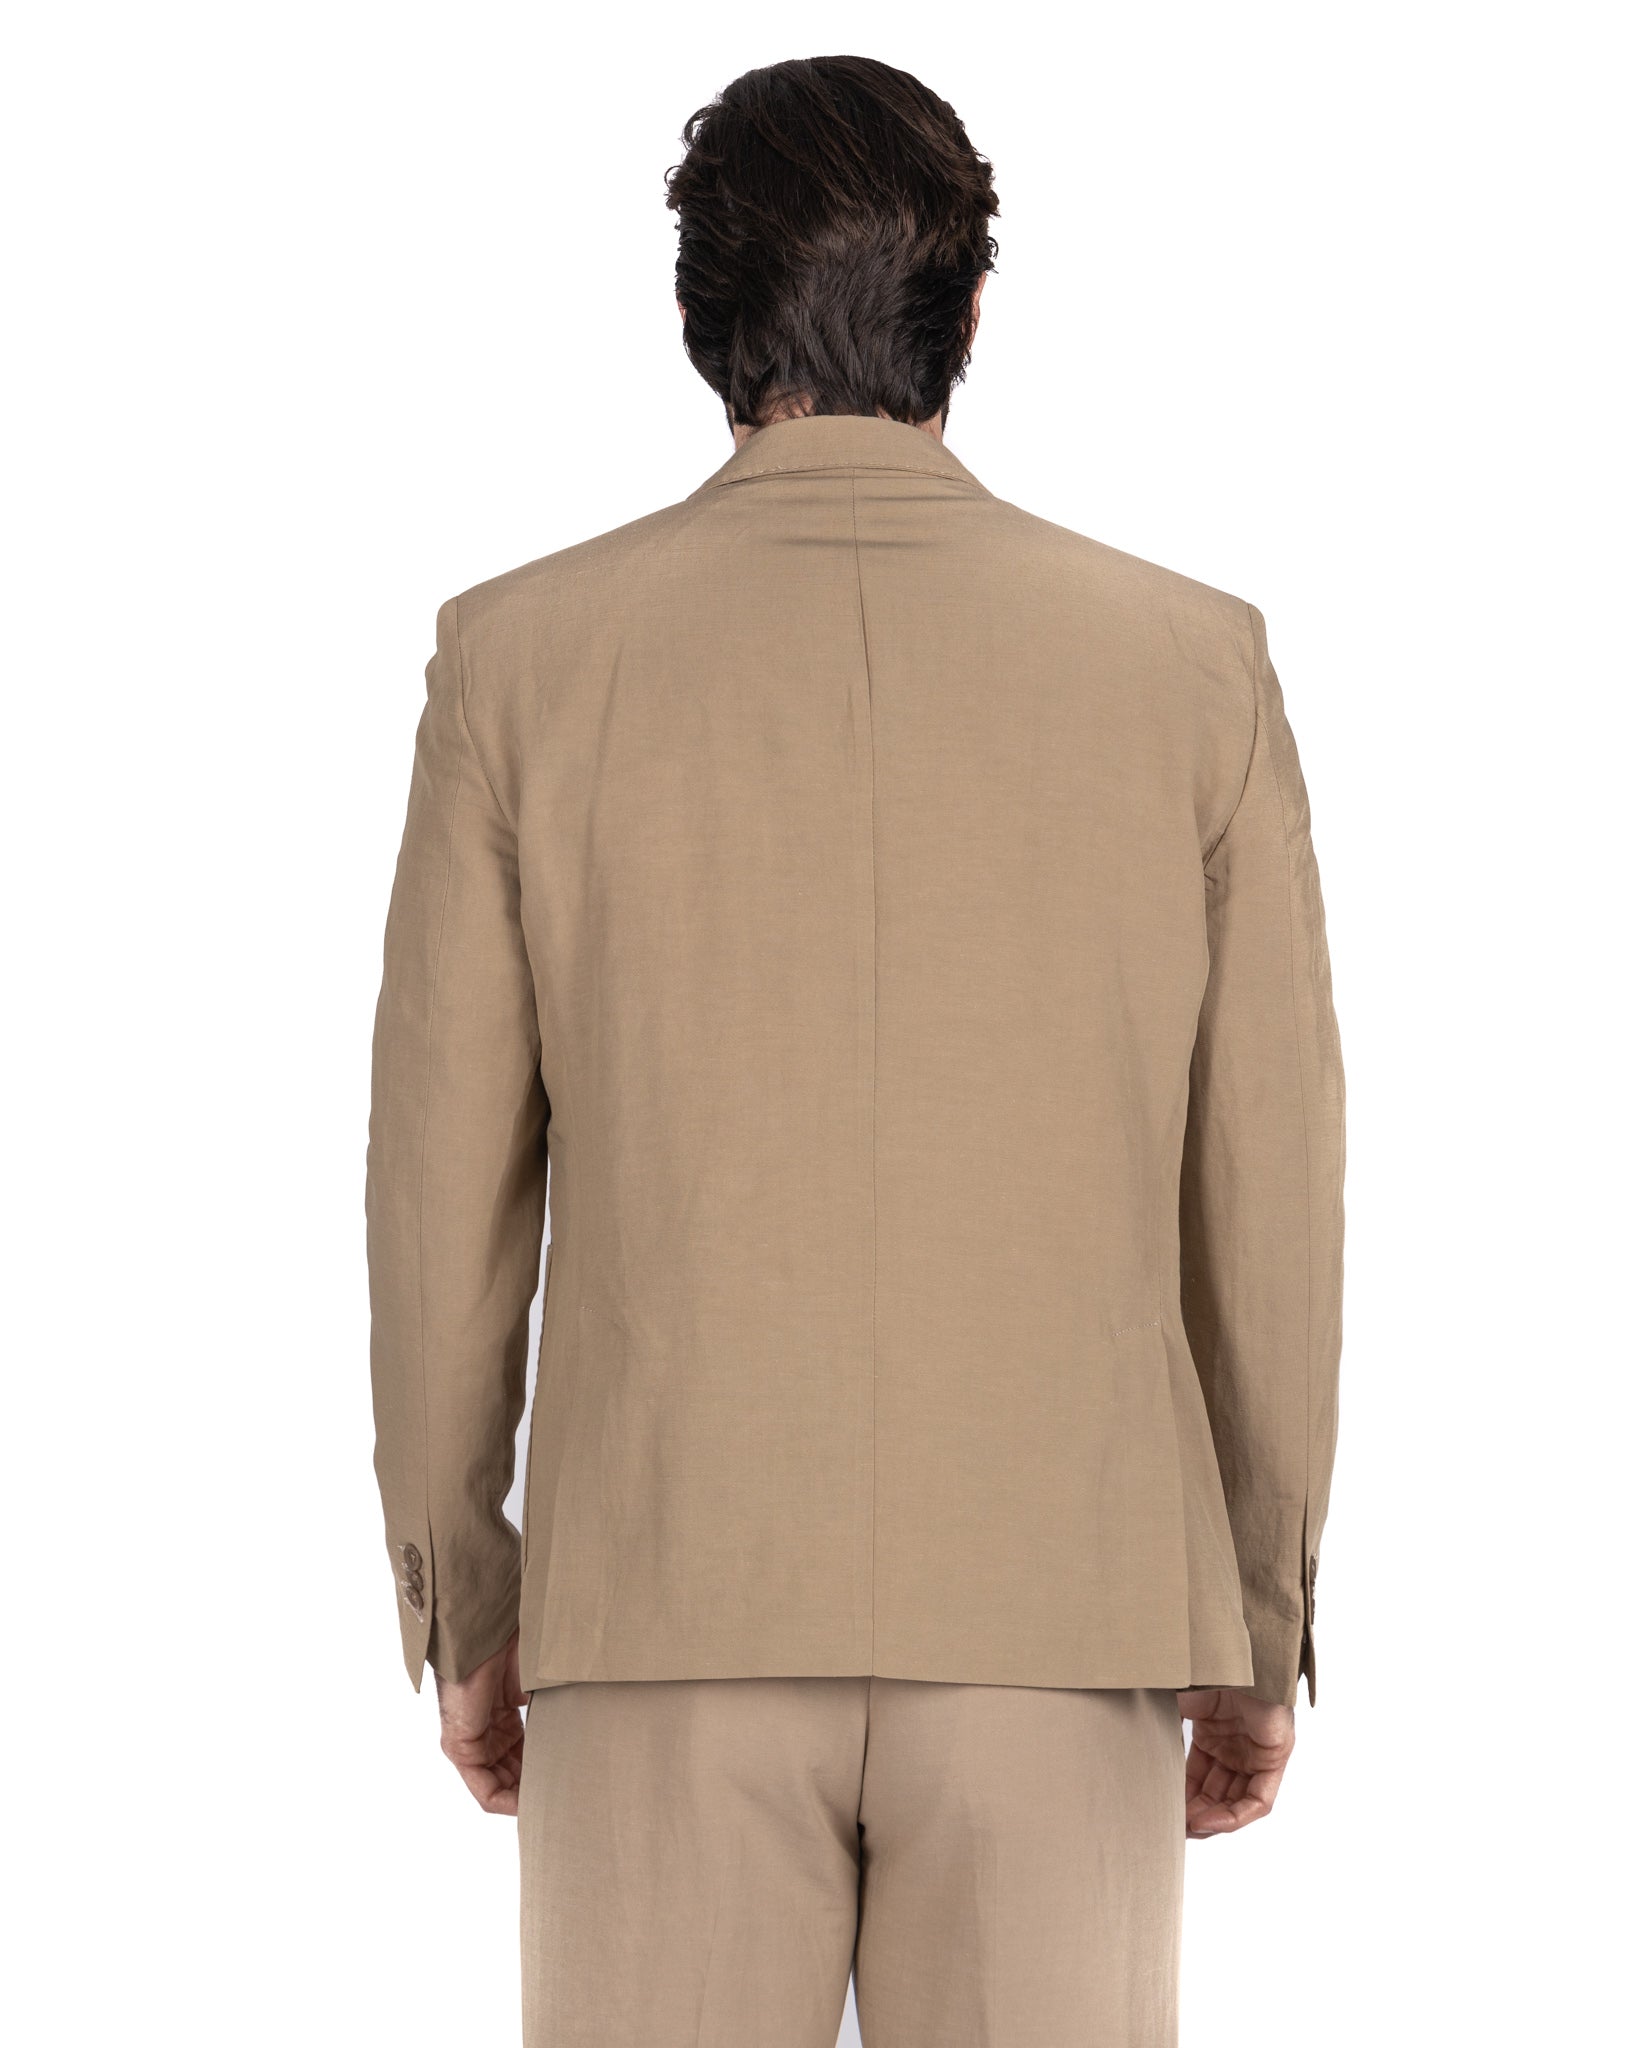 Ventotene - camel single-breasted linen suit